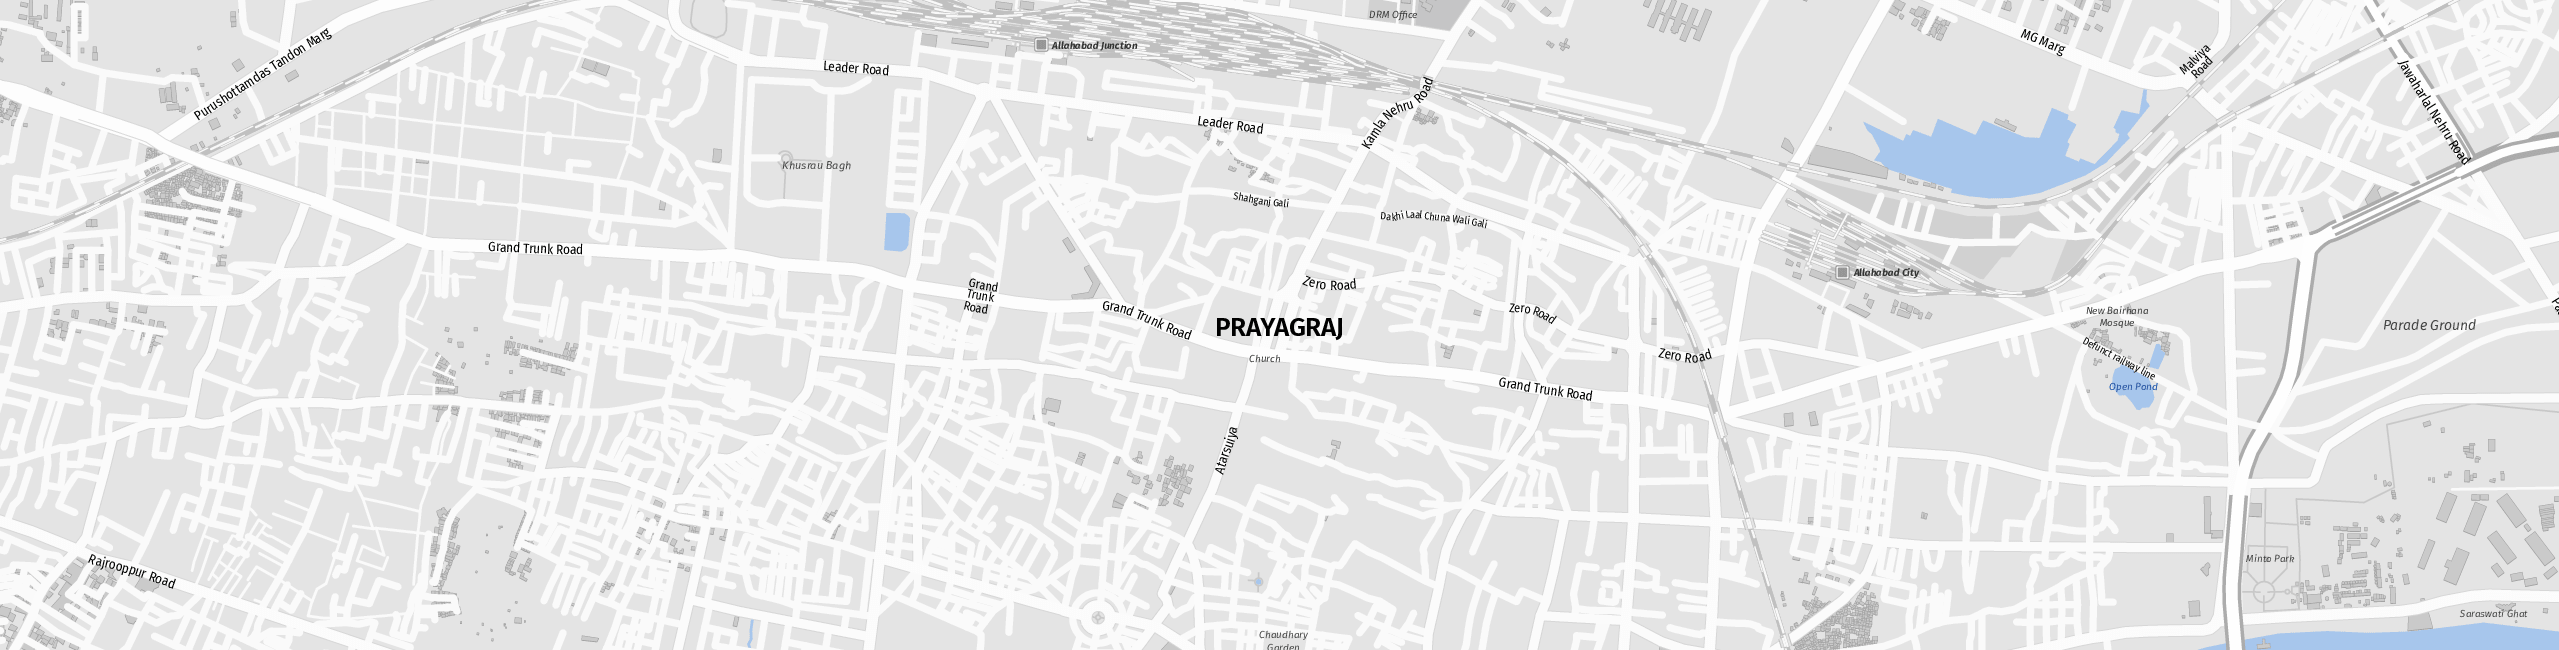 Stadtplan Prayagraj zum Downloaden.